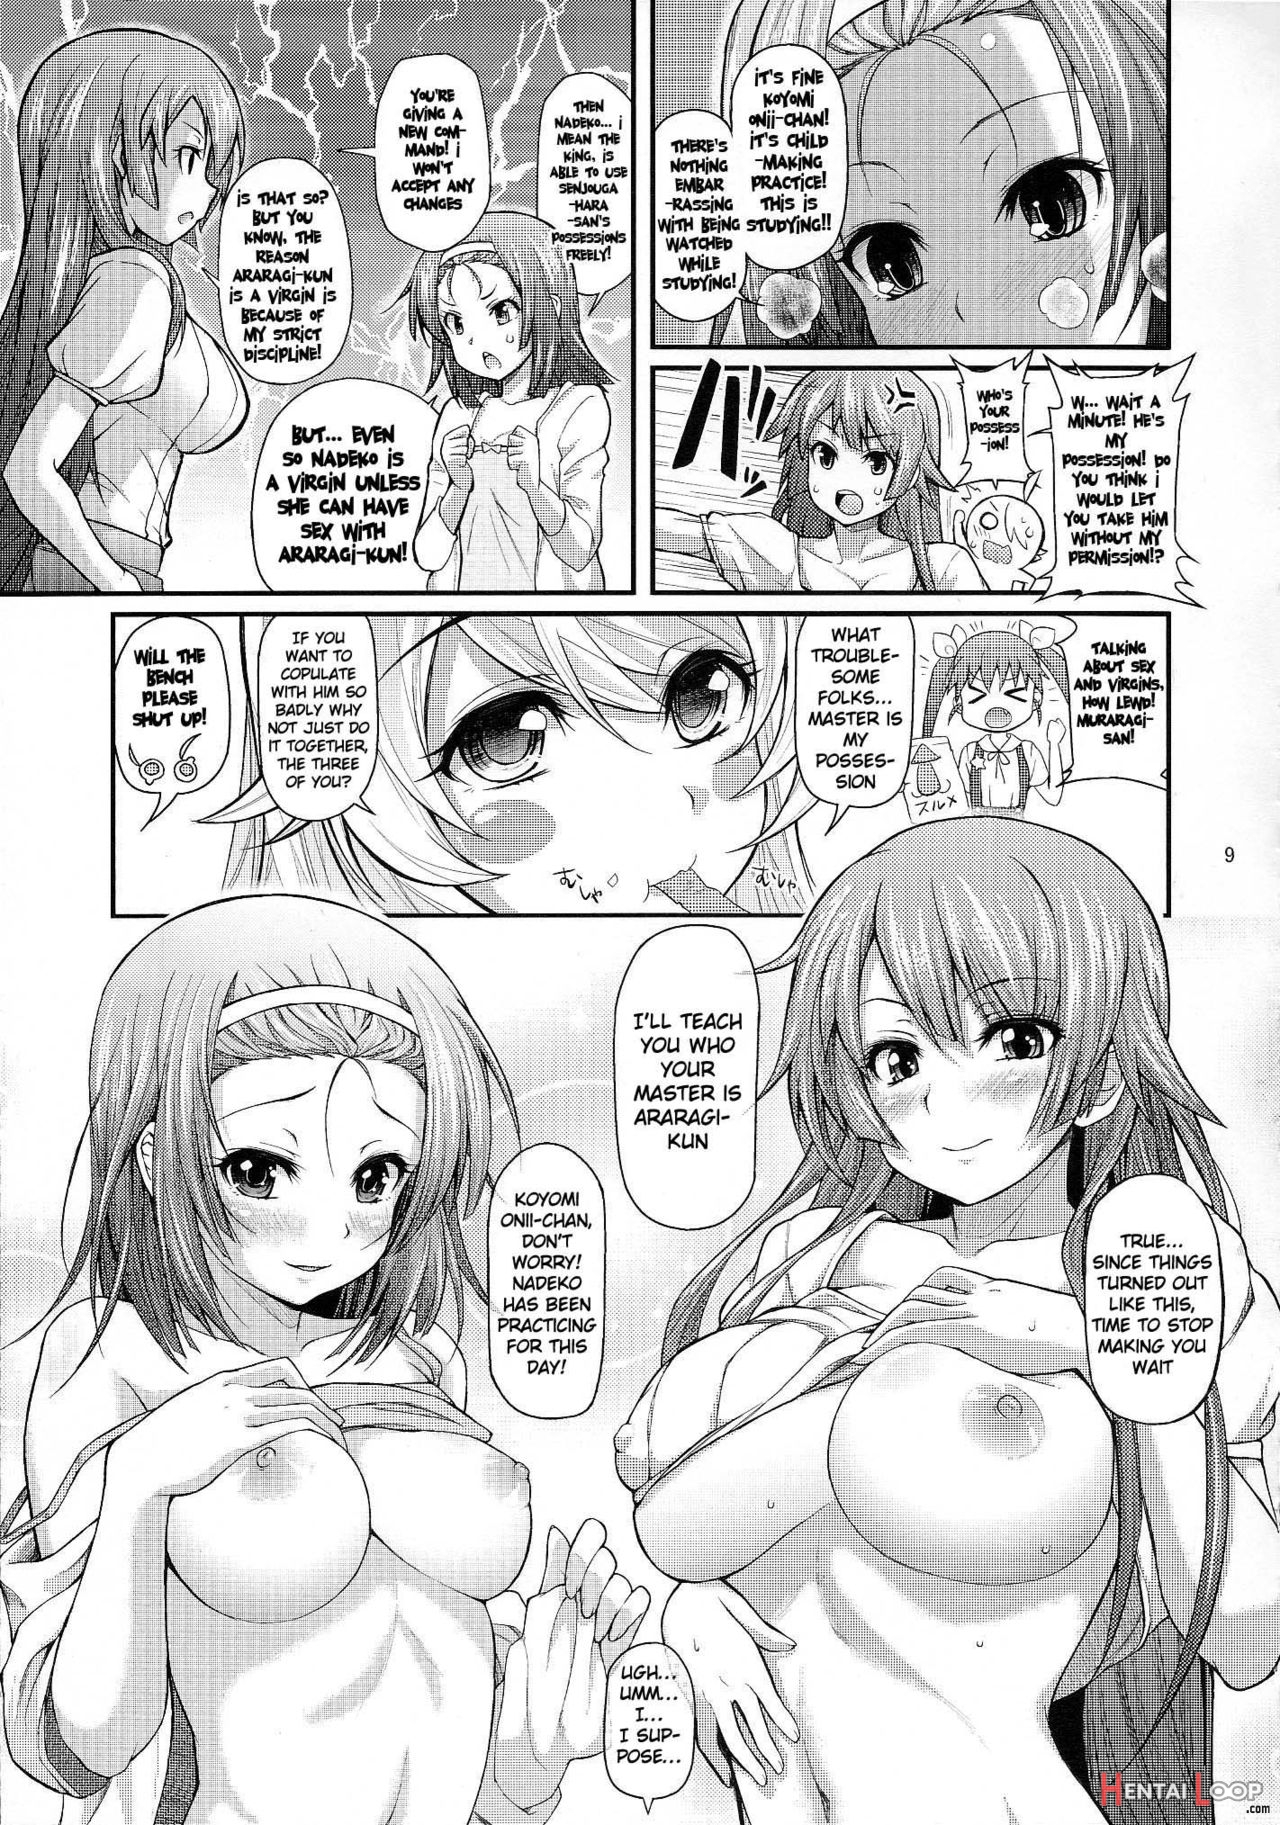 Pachimonogatari Part 5: Koyomi Party page 8